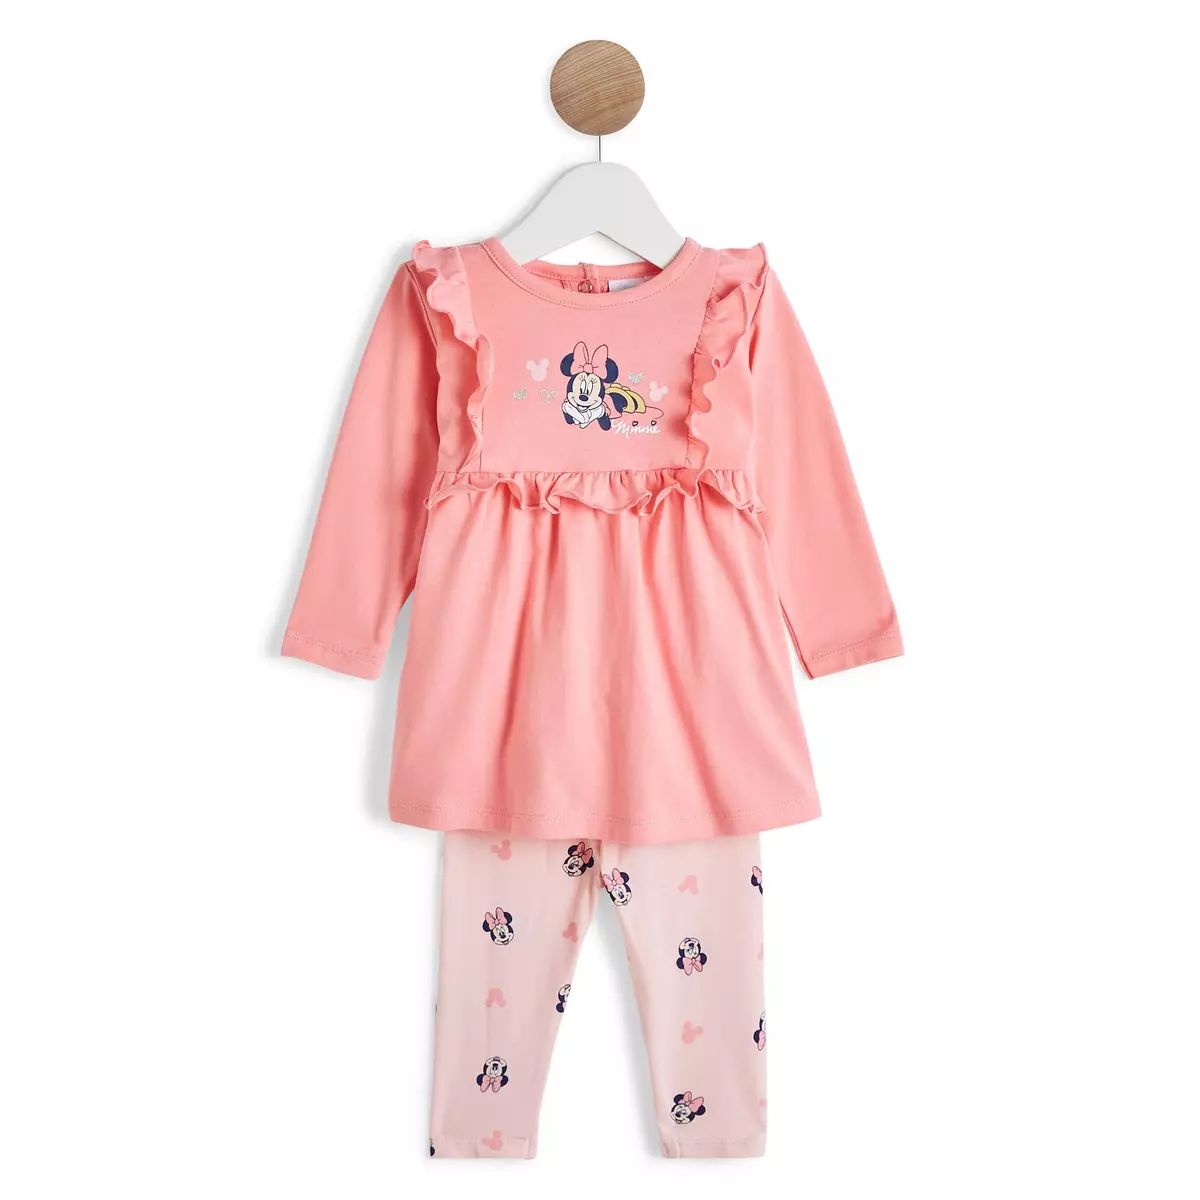 INEXTENSO Ensemble robe + legging rose bébé fille Minnie